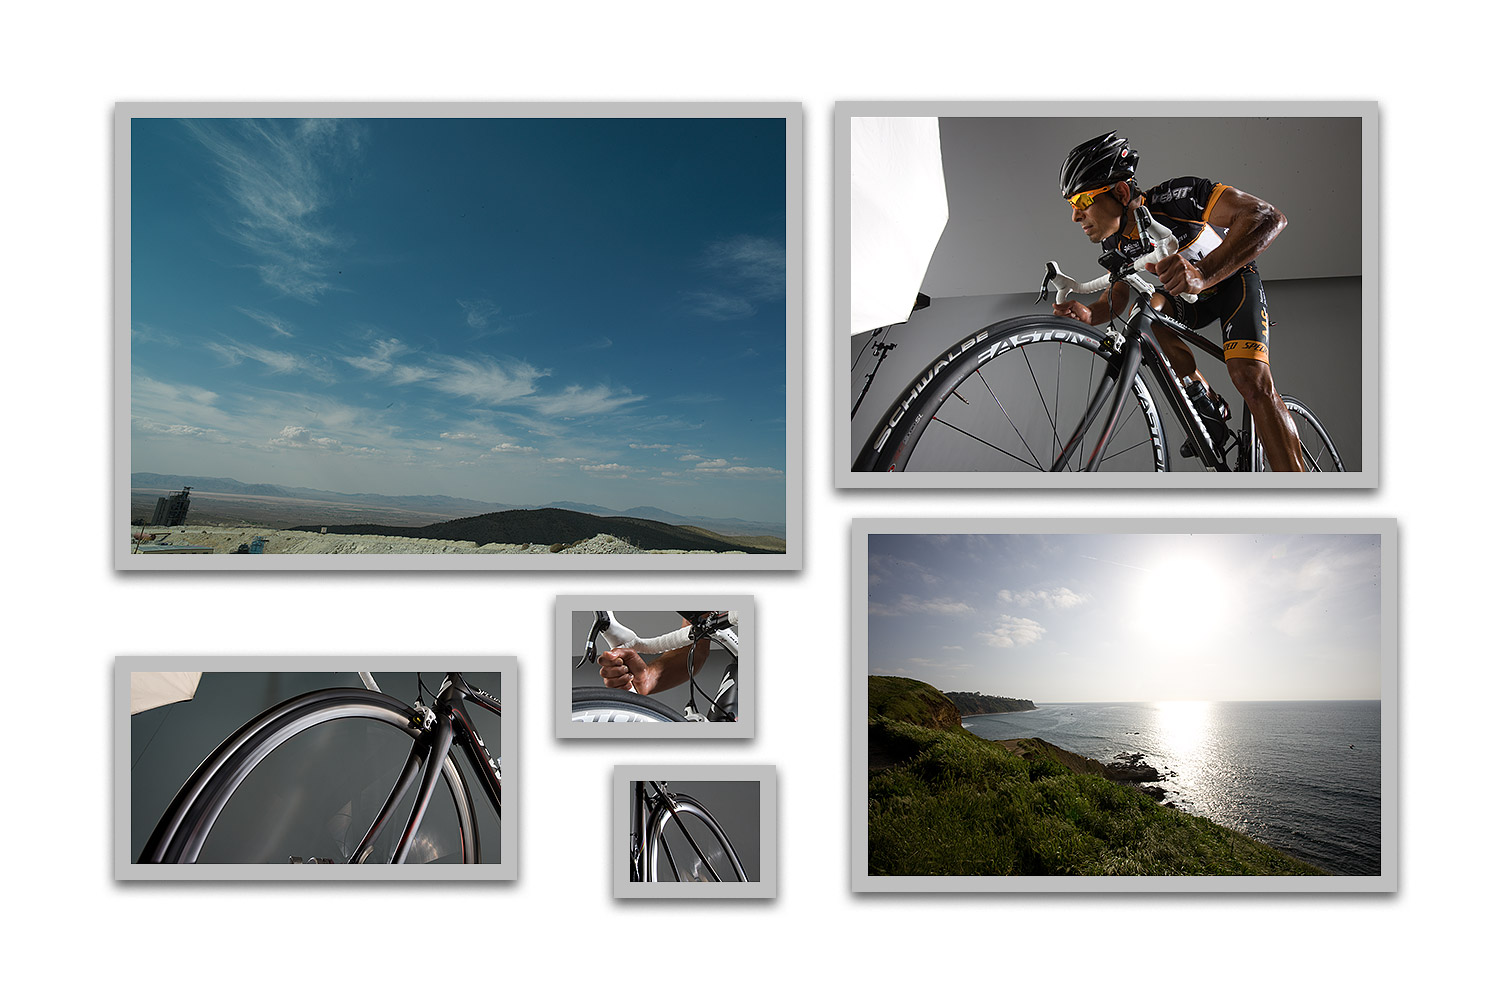 Bicycle-Rider-Original-Images.jpg